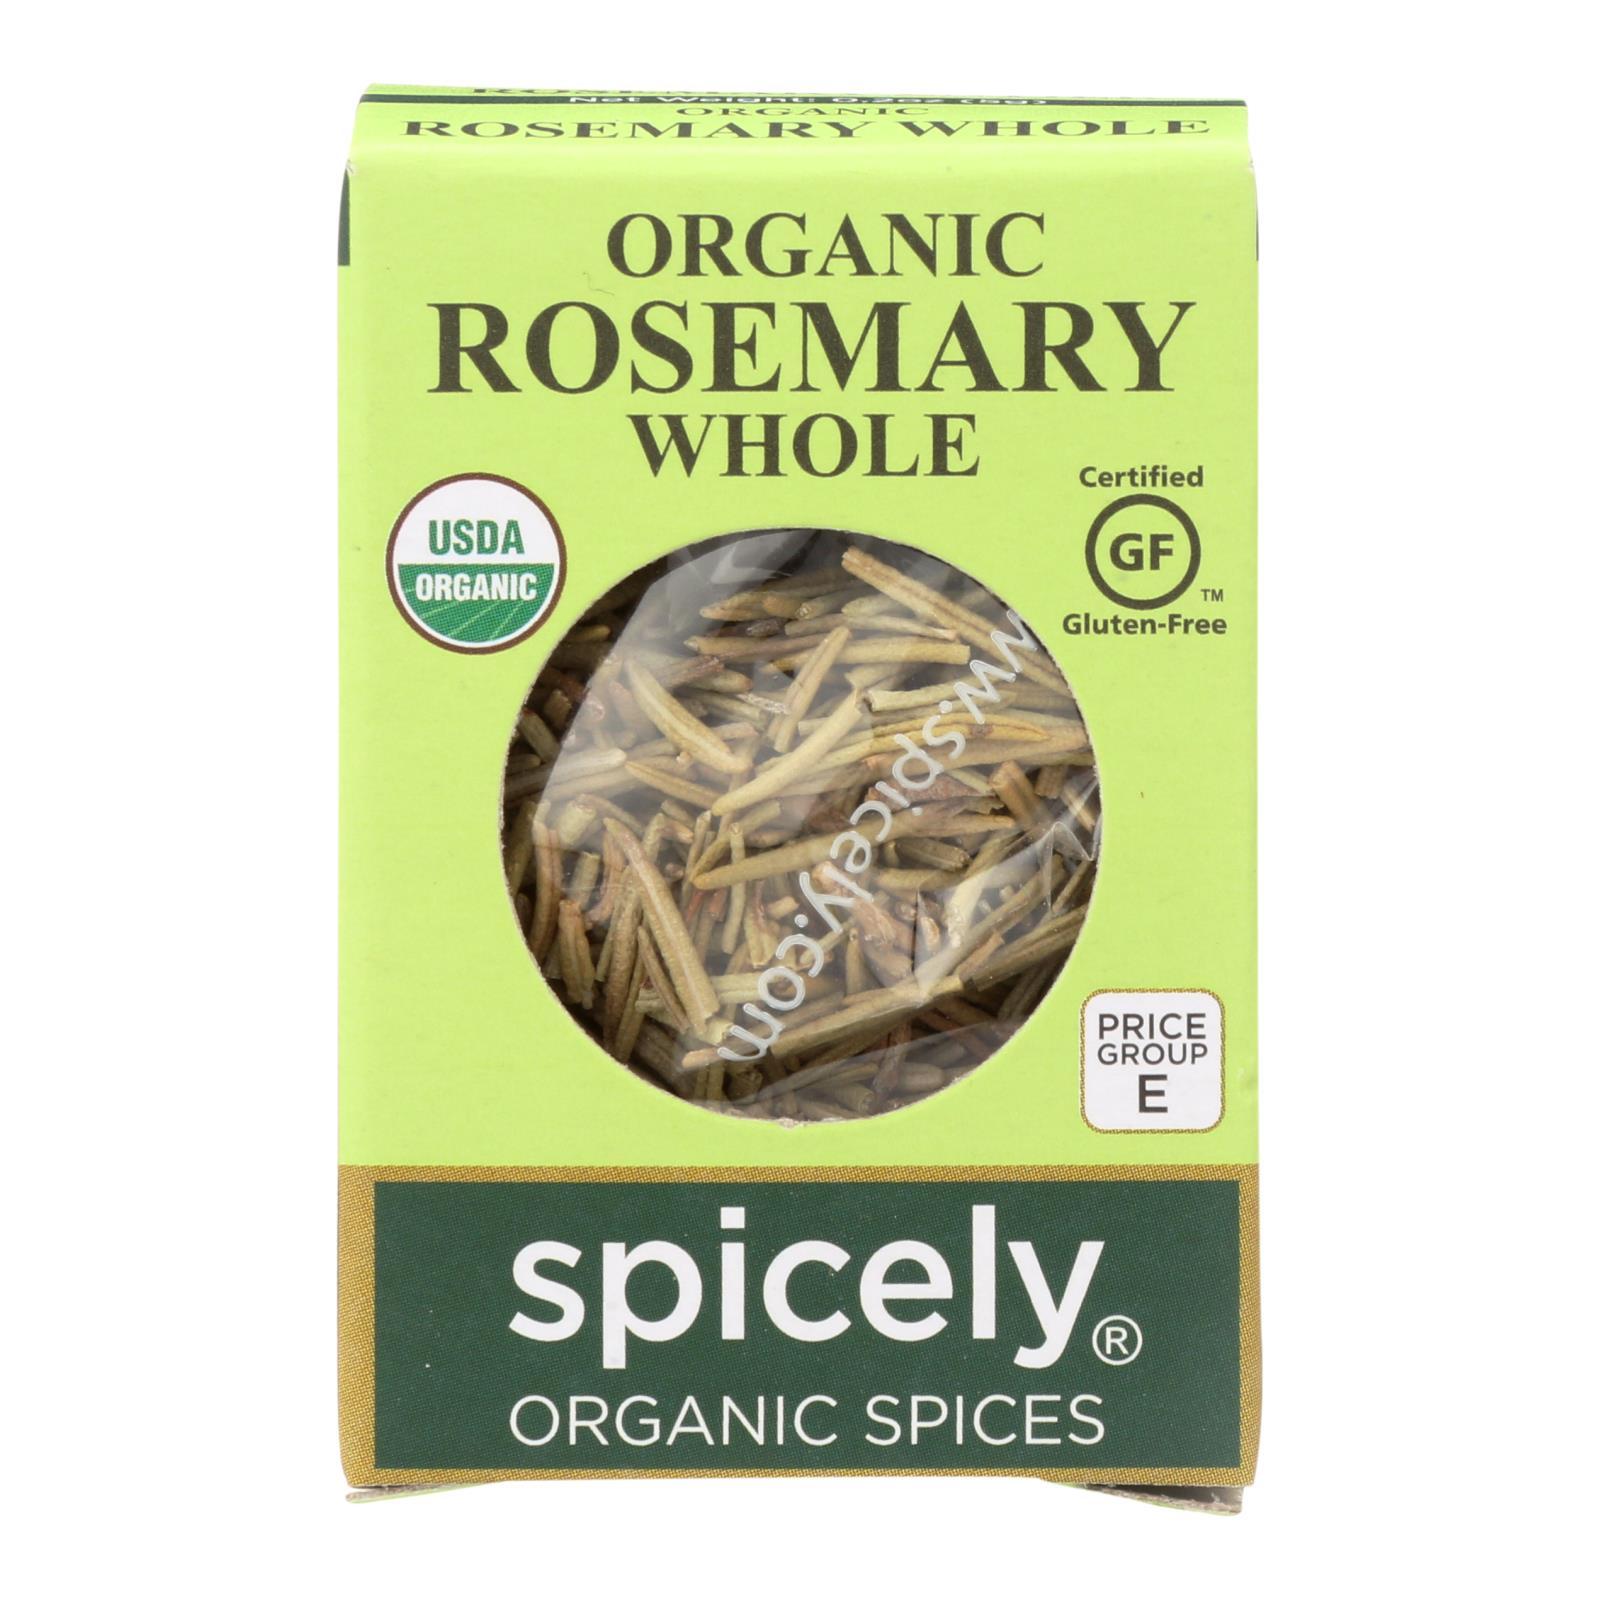 Spicely Organics - Organic Rosemary - Whole - 6개 묶음상품 - 0.2 oz.